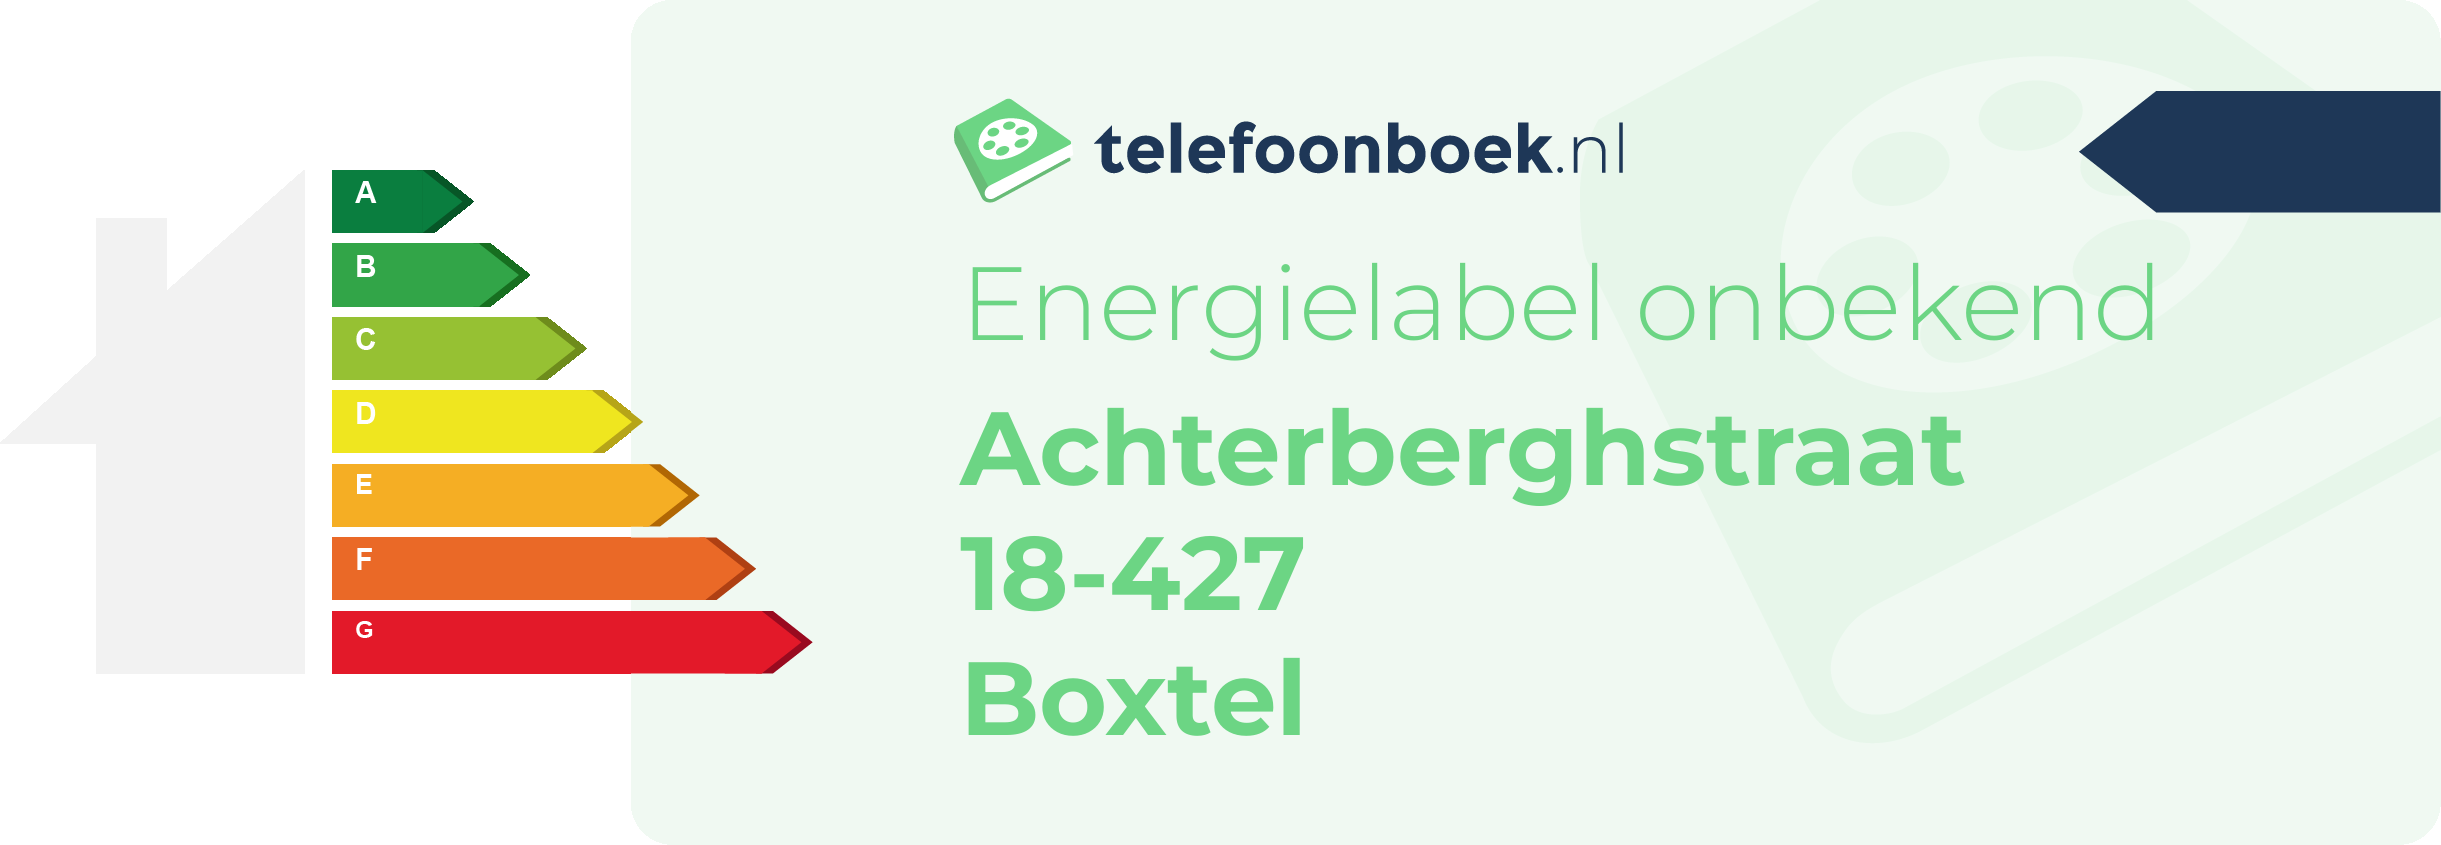 Energielabel Achterberghstraat 18-427 Boxtel